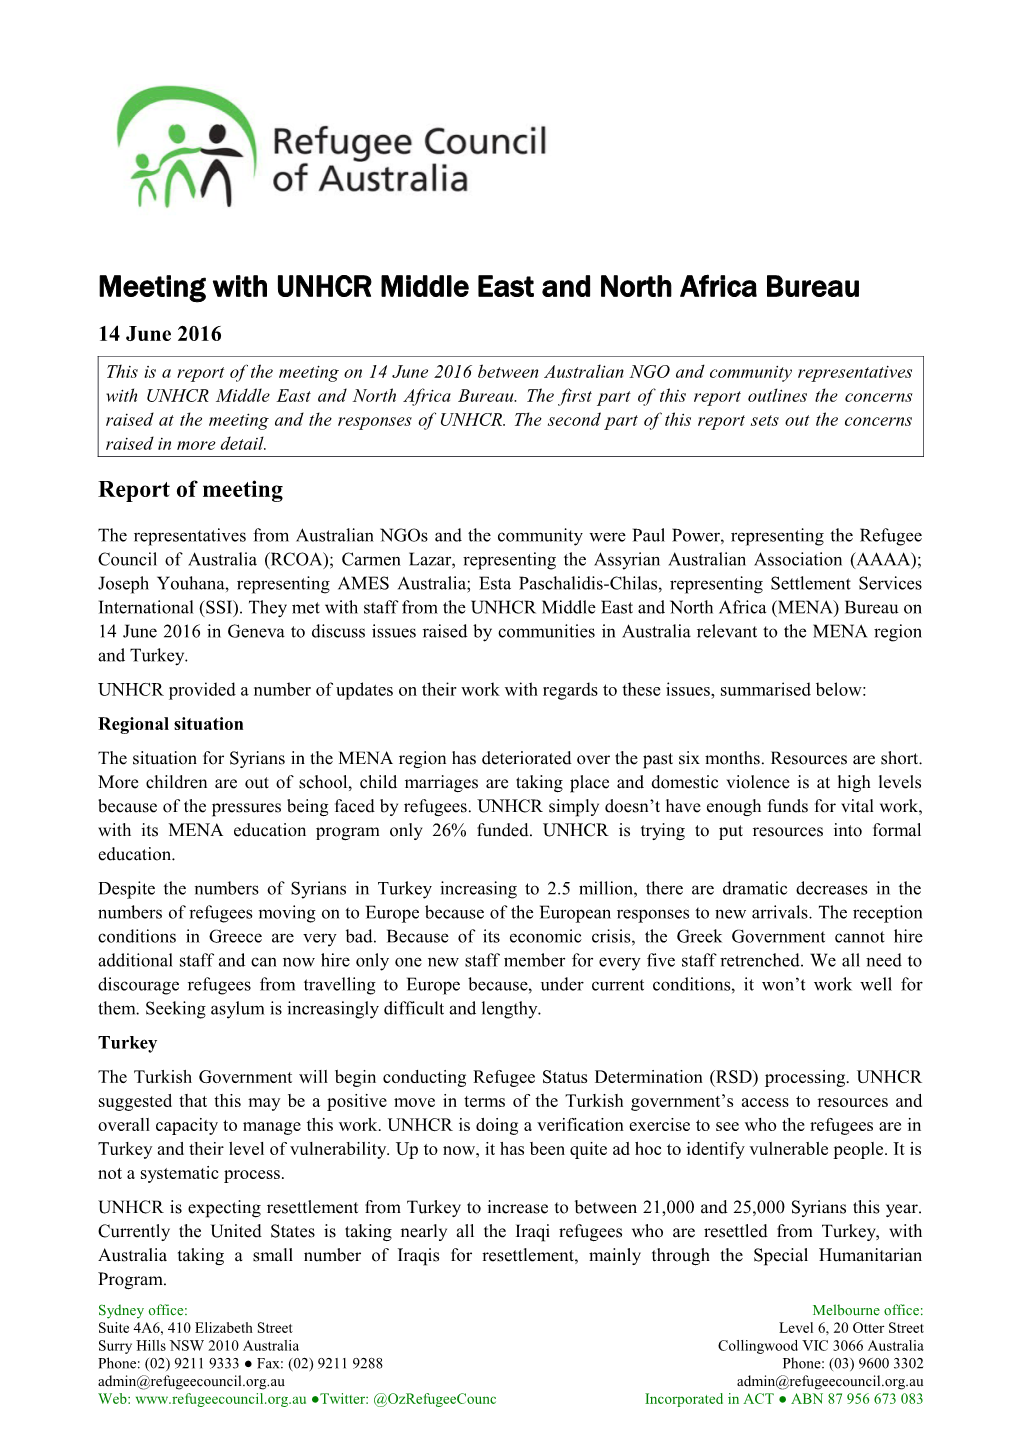 Meeting with UNHCR MENA Bureau 2016